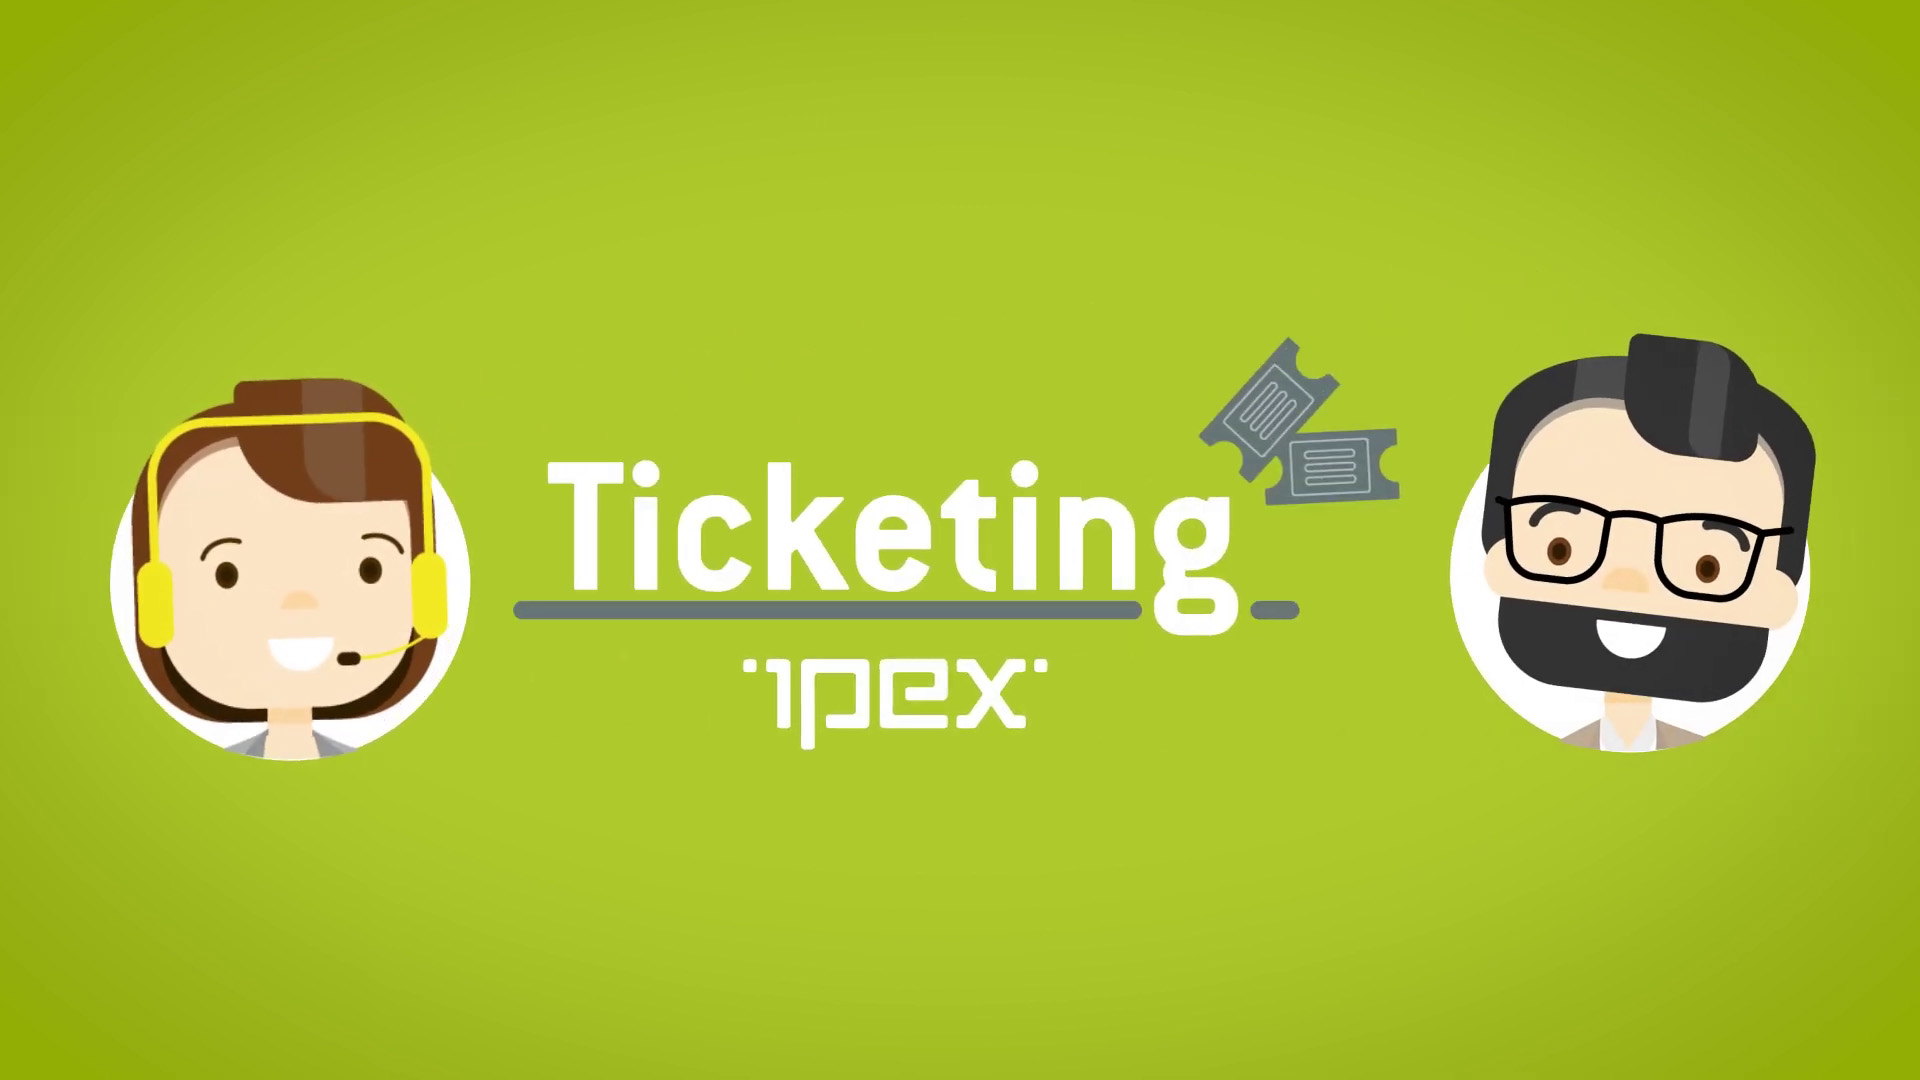 IPEX - Reklamní spot na ticketing 